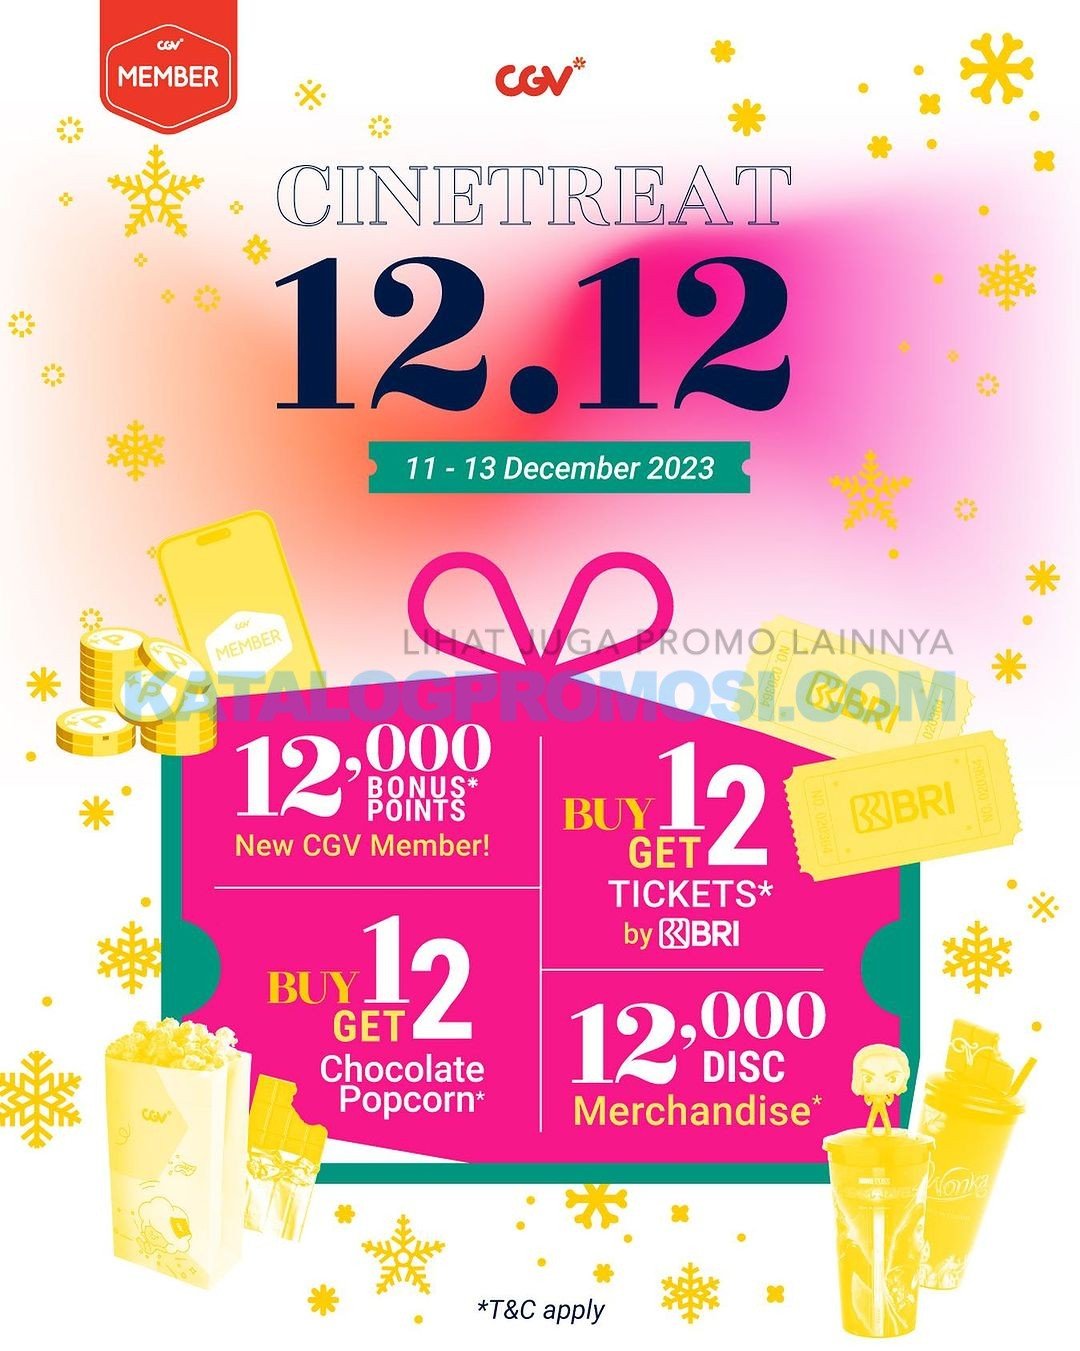 Promo CGV CINEMA CineTREATS 12.12